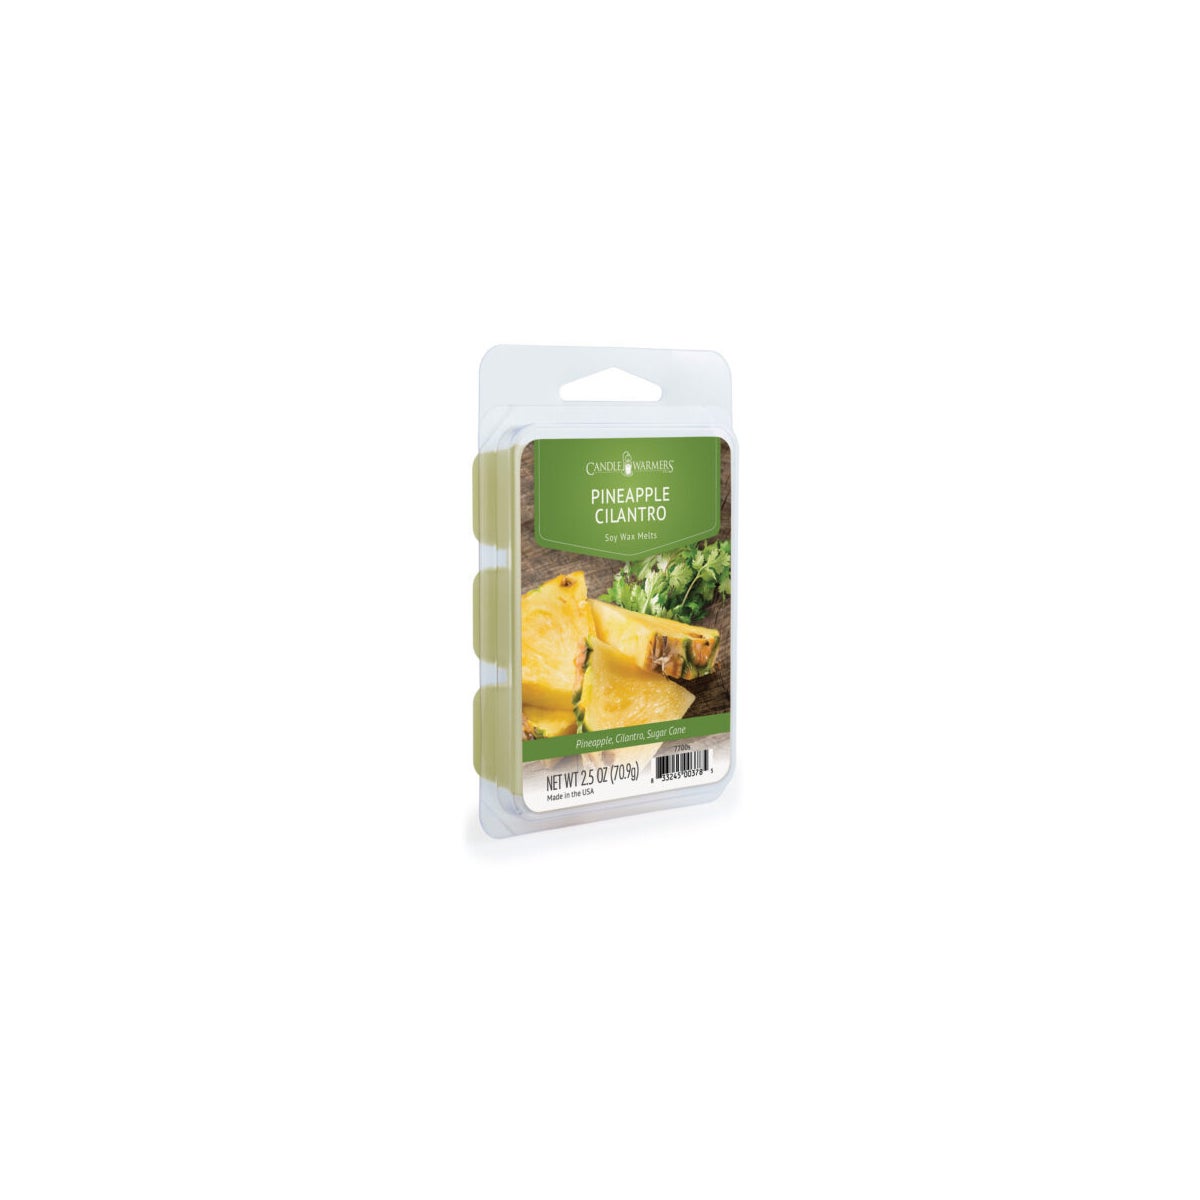 Classic Wax Melts 2.5 oz - Pineapple Cilantro